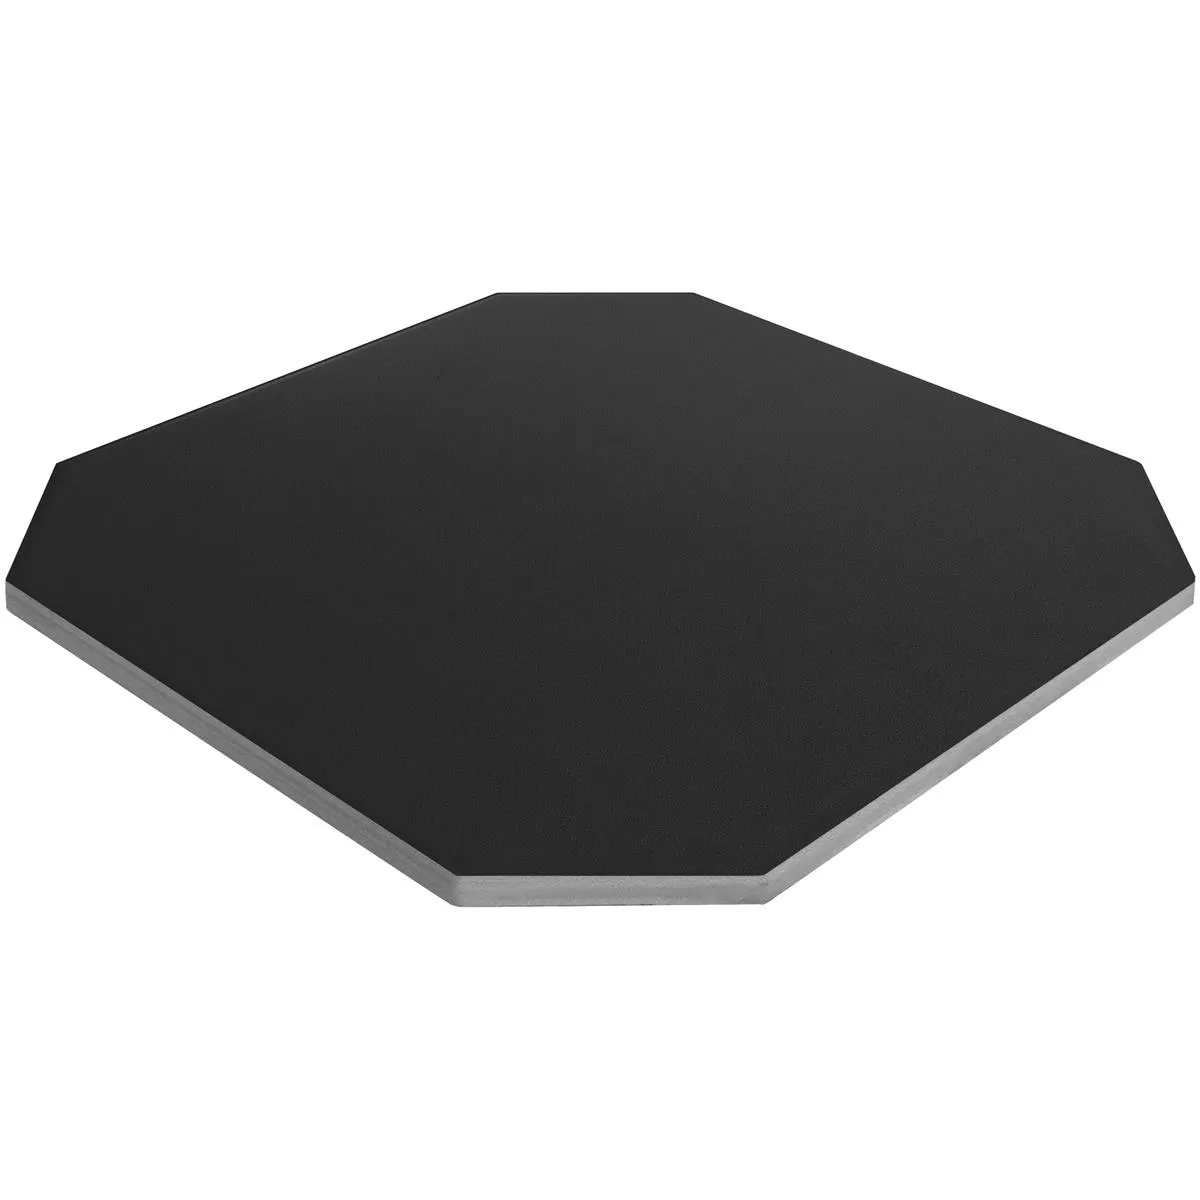 Mодел от Порцеланови Kаменинови Изделия Плочки Genexia Uni Черно Осмоъгълник 20x20cm